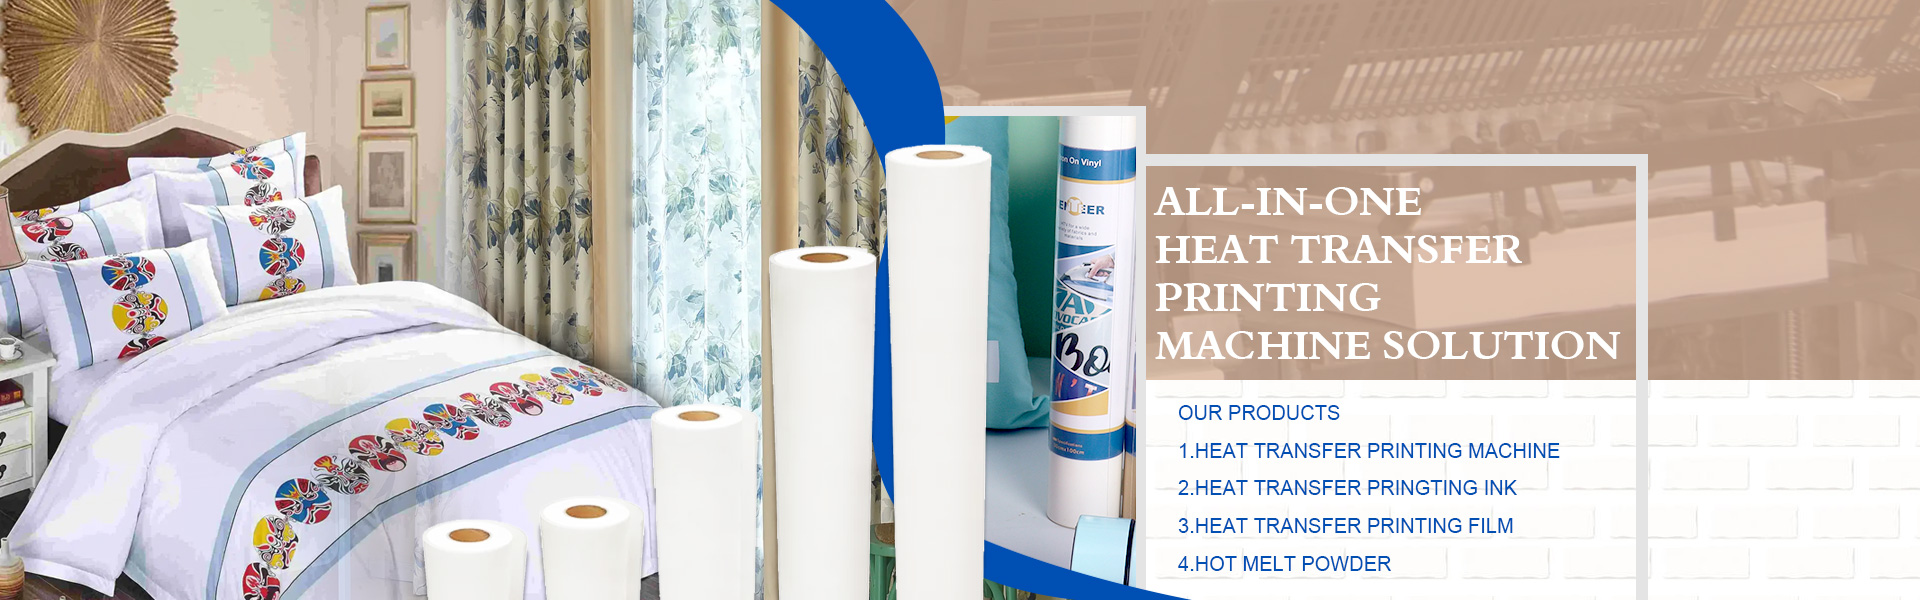 бумага для теплопередачи, сублимационная бумага, цифровая бумага принтера,Suzhou Huarong Paper Products Co., Ltd